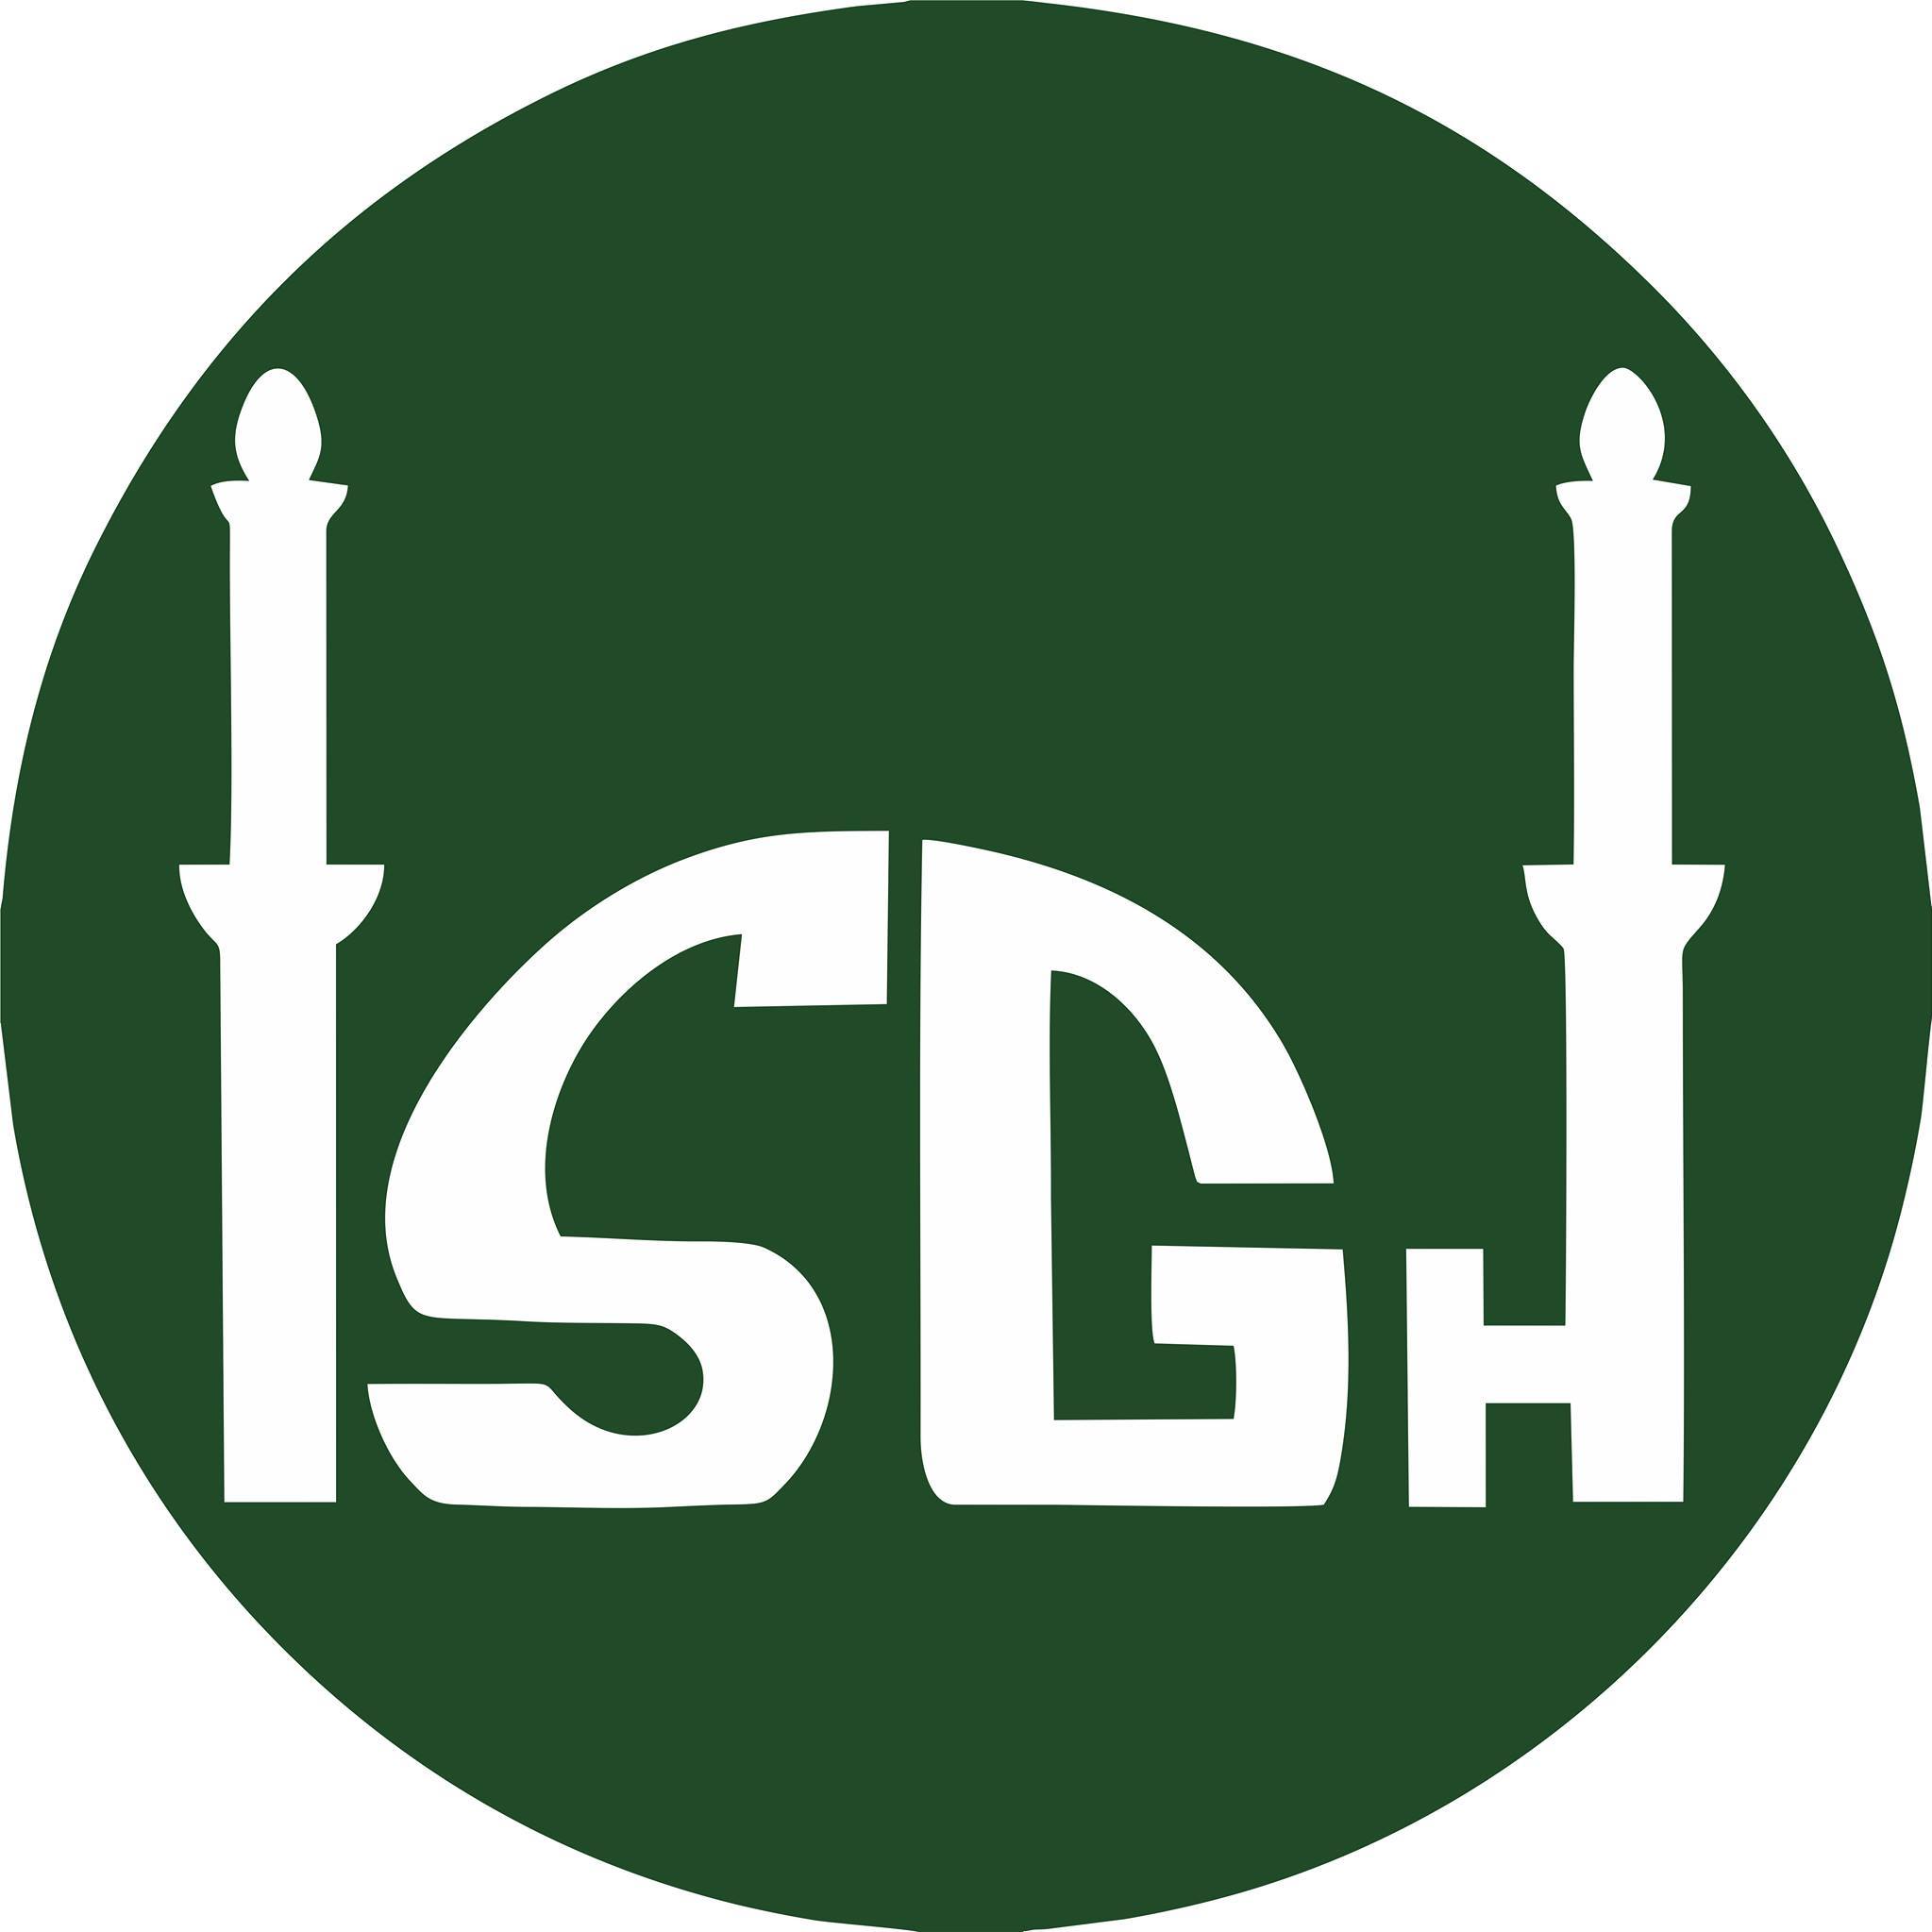 Muslim Education Charity Organization in USA - Islamic Society of Greater Houston